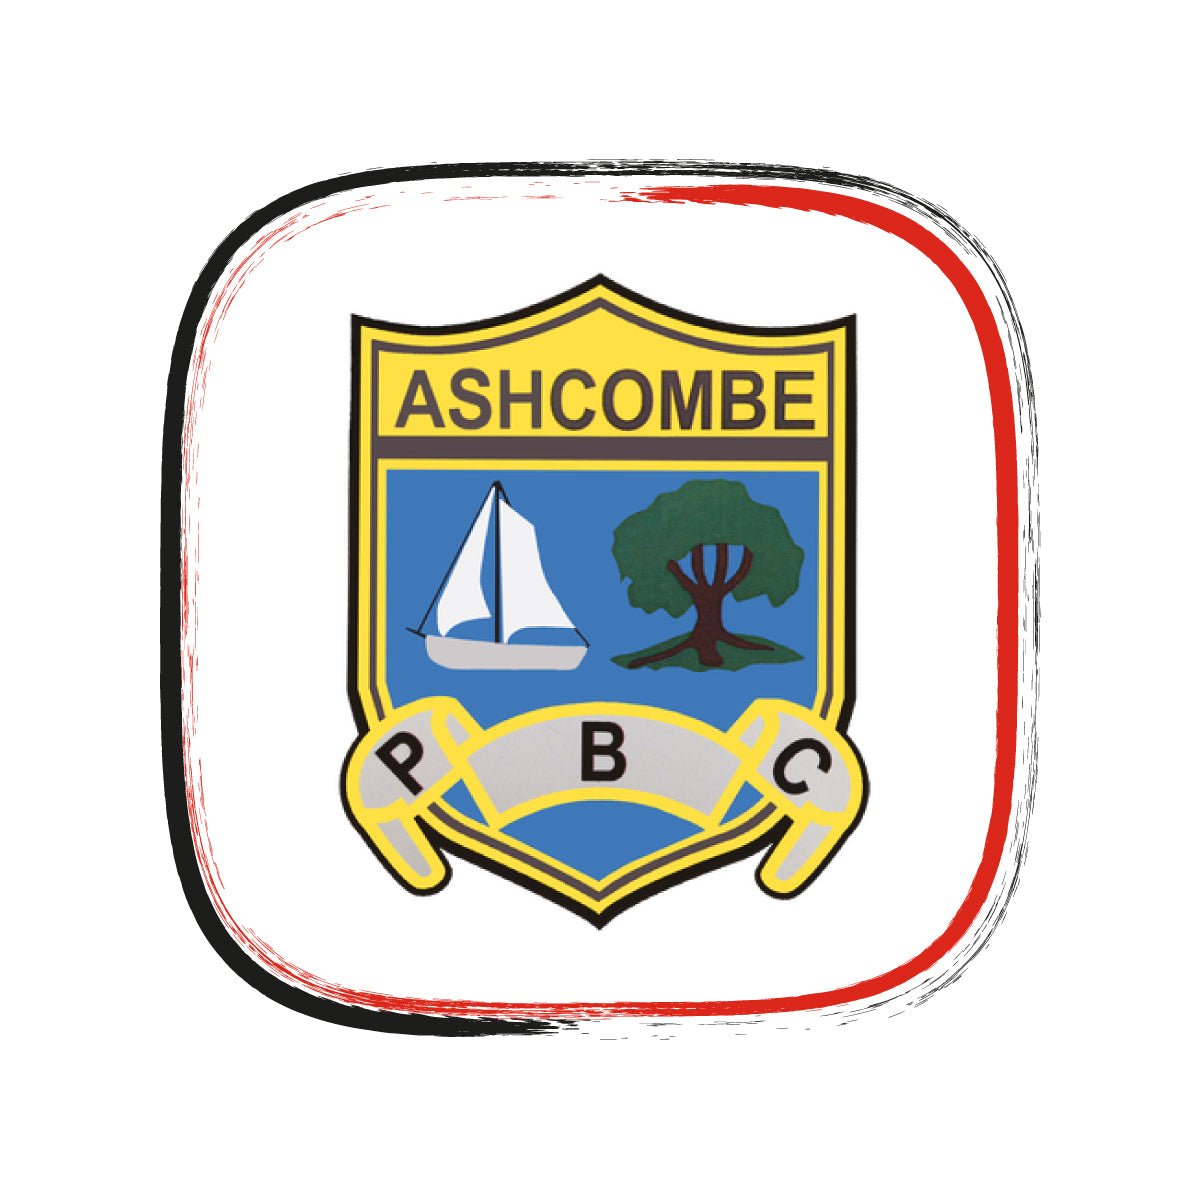 Ashcombe Park Bowls